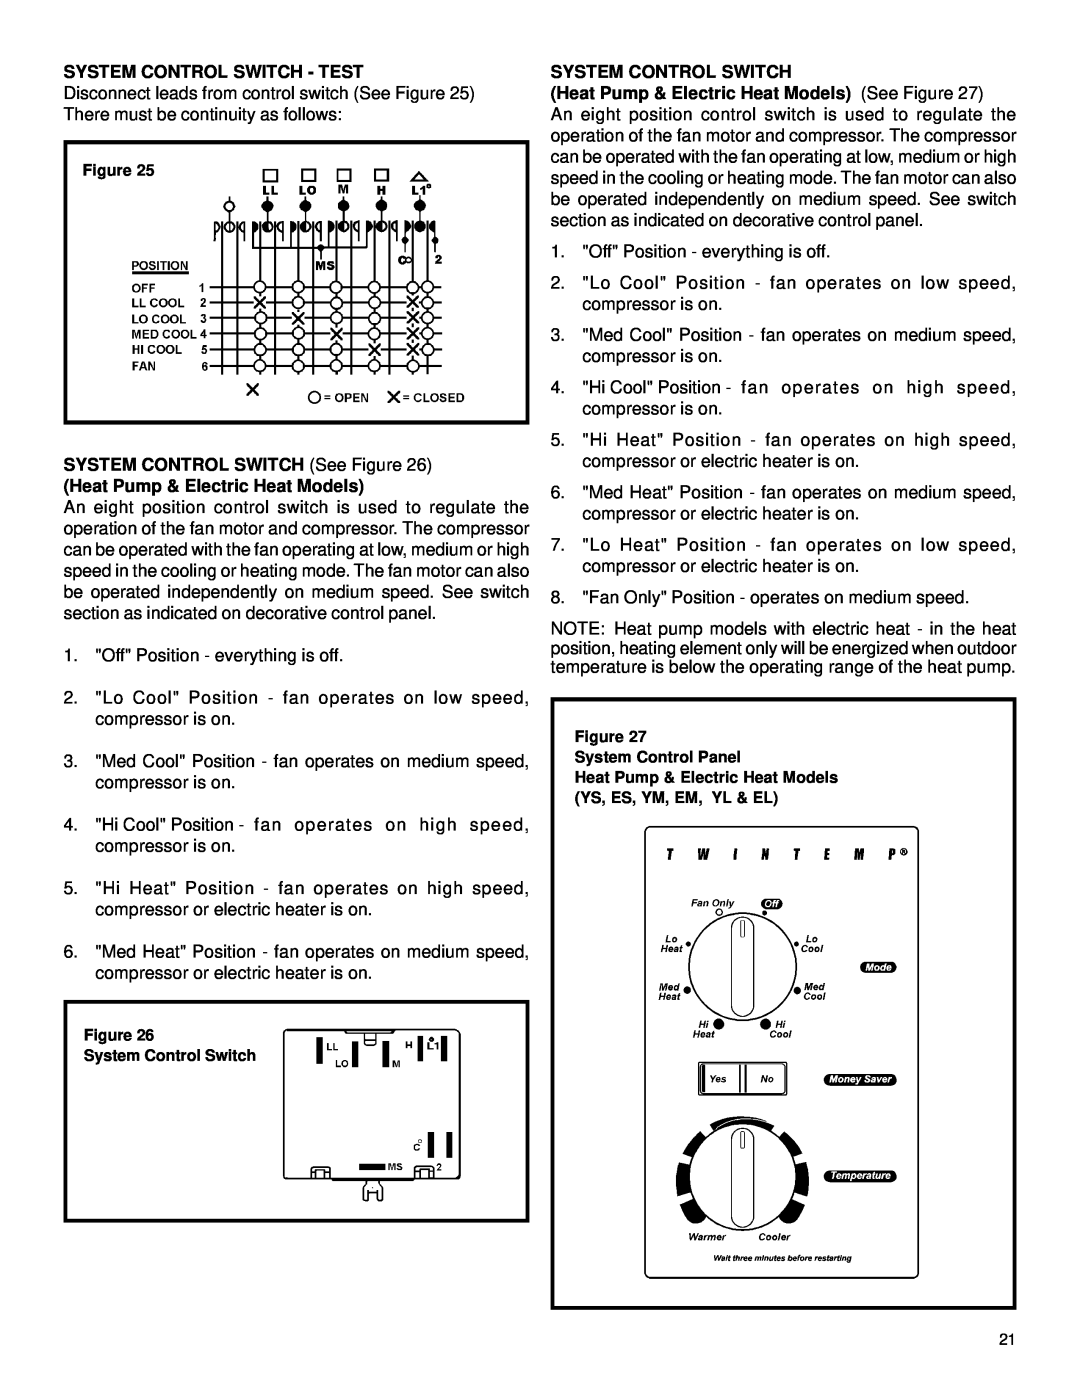 Friedrich racservmn System Control Switch - Test, SYSTEM CONTROL SWITCH See Figure, Heat Pump & Electric Heat Models 